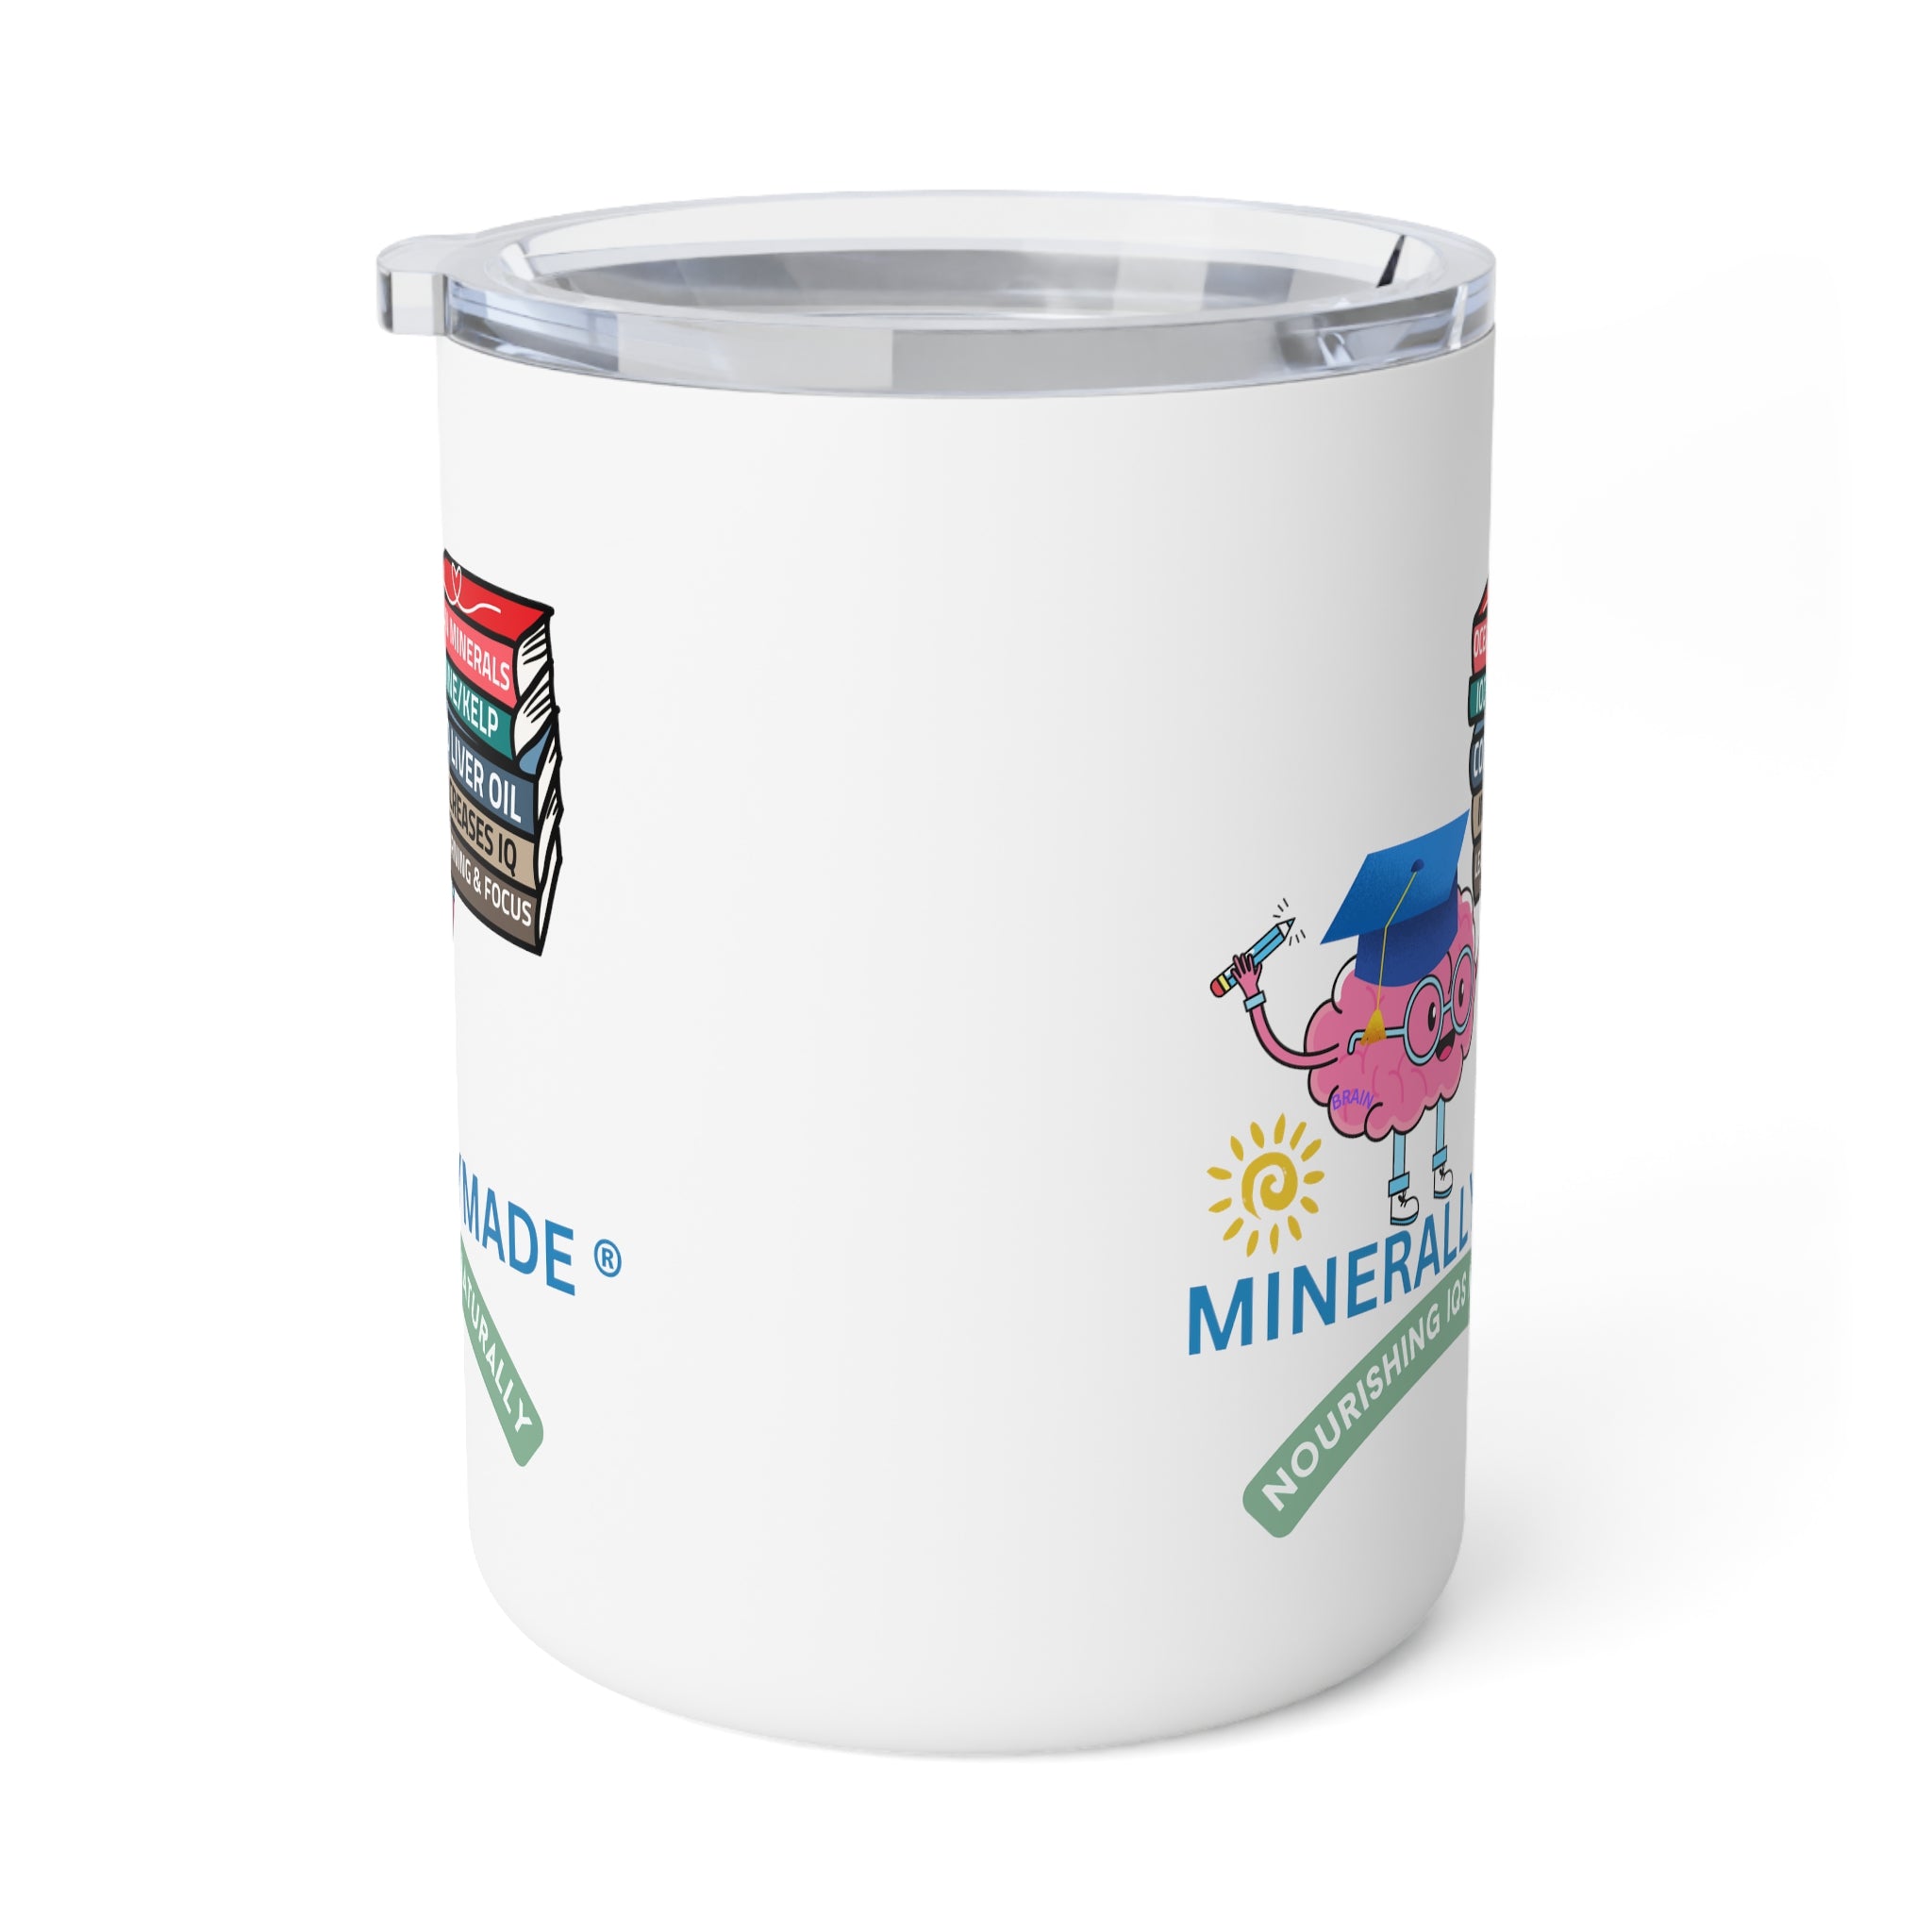 Minerallymade | Nourishing IQs Naturally | Insulated Coffee Mug, 10oz